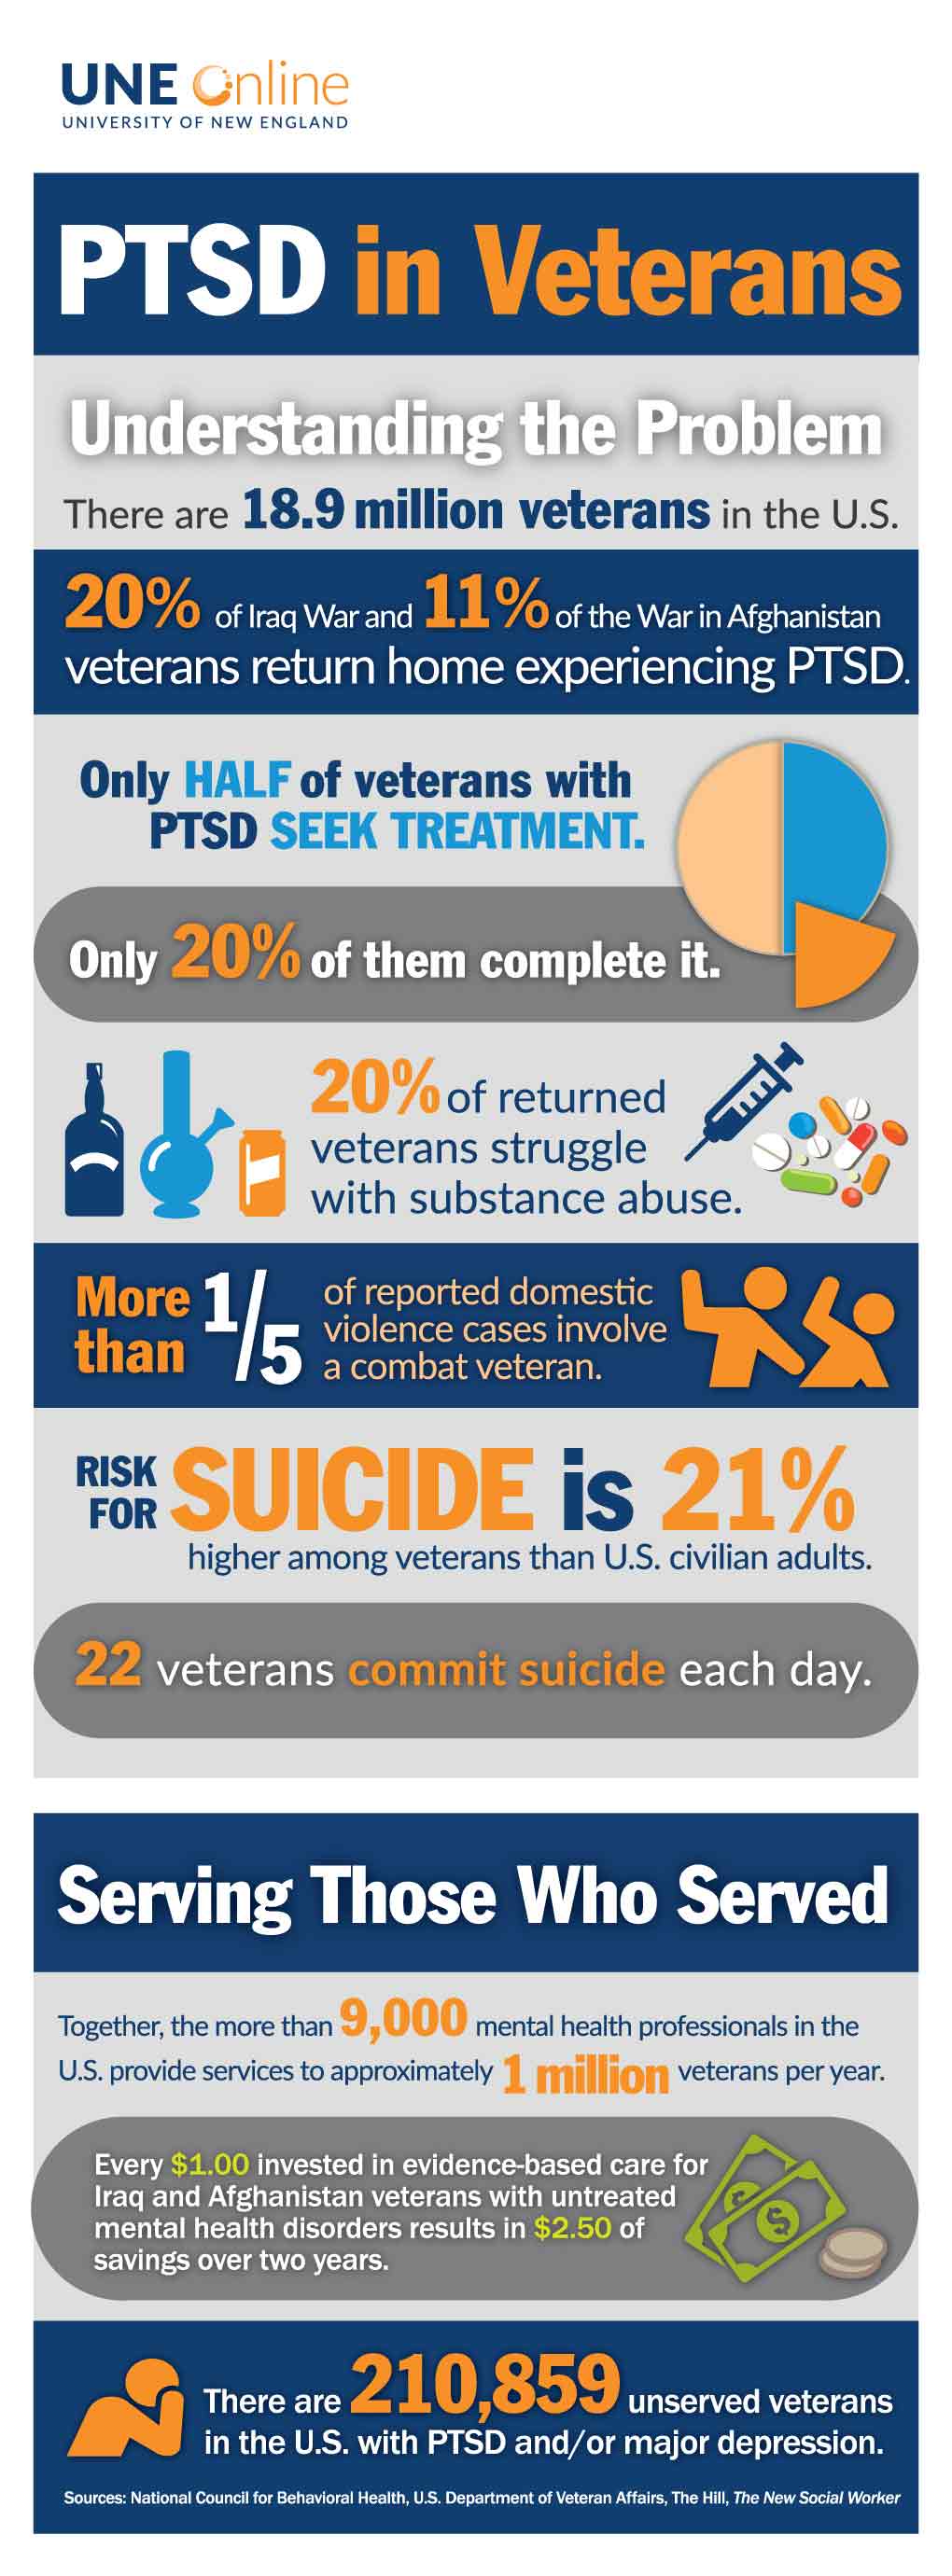 PTSD infographic describing PTSD among veterans, good for trauma studies graduate programs